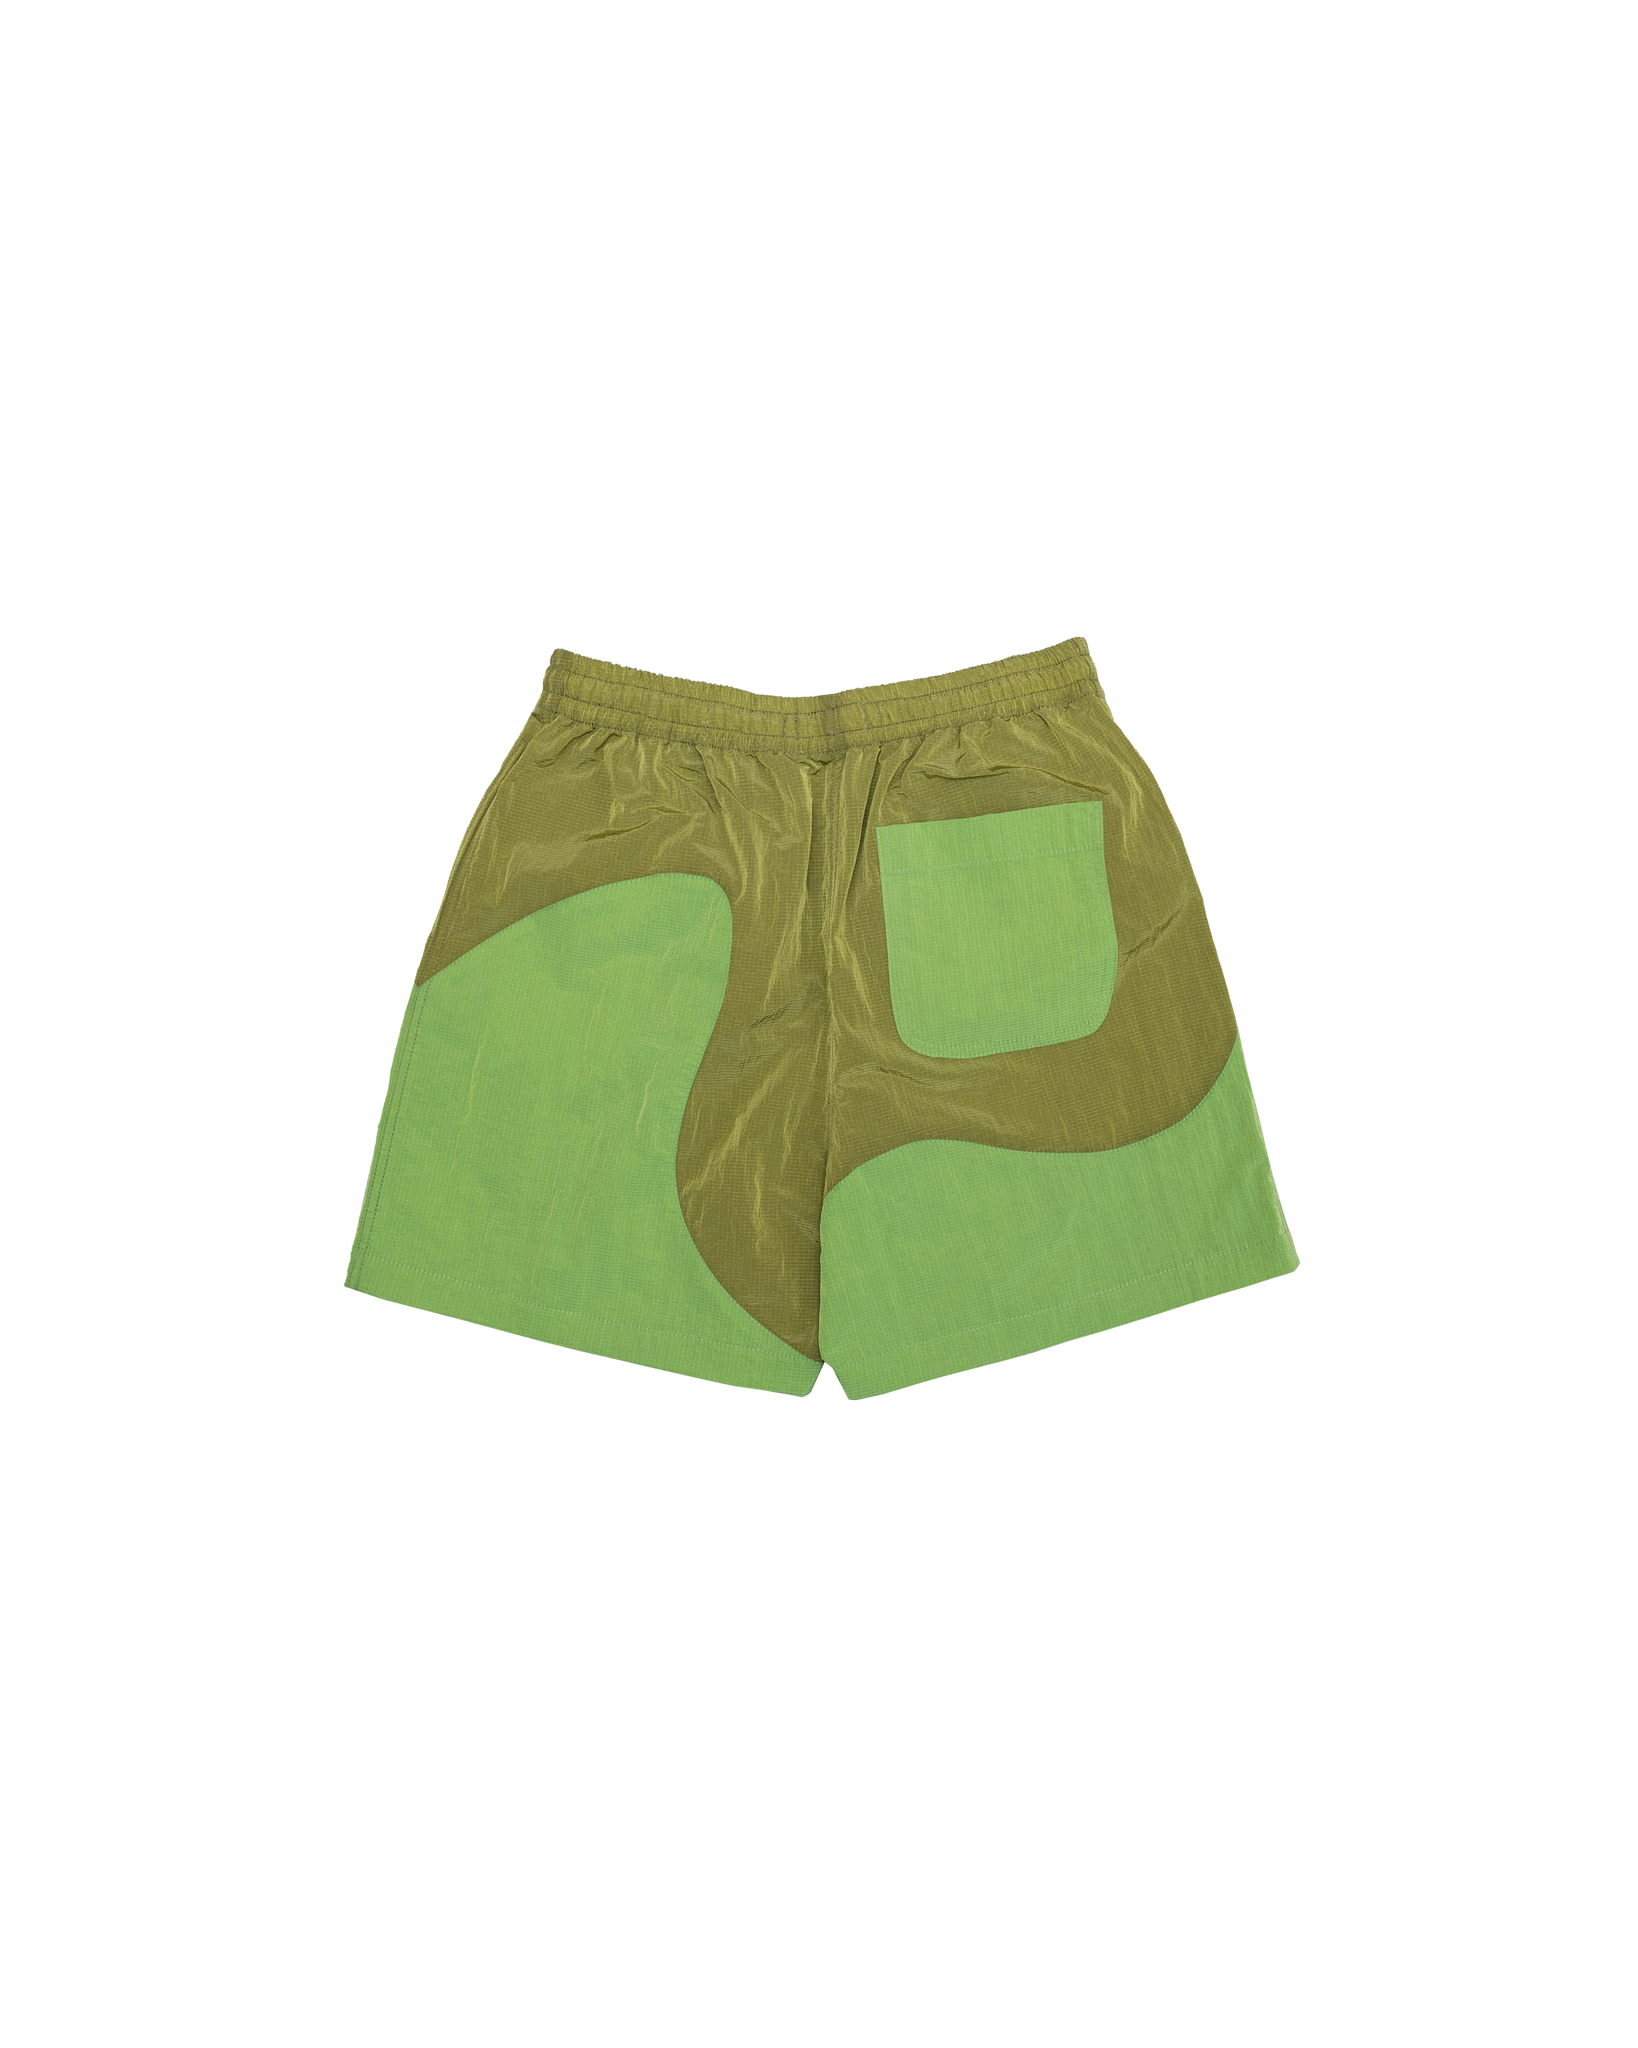 Onda Shorts: Avocado/Lime